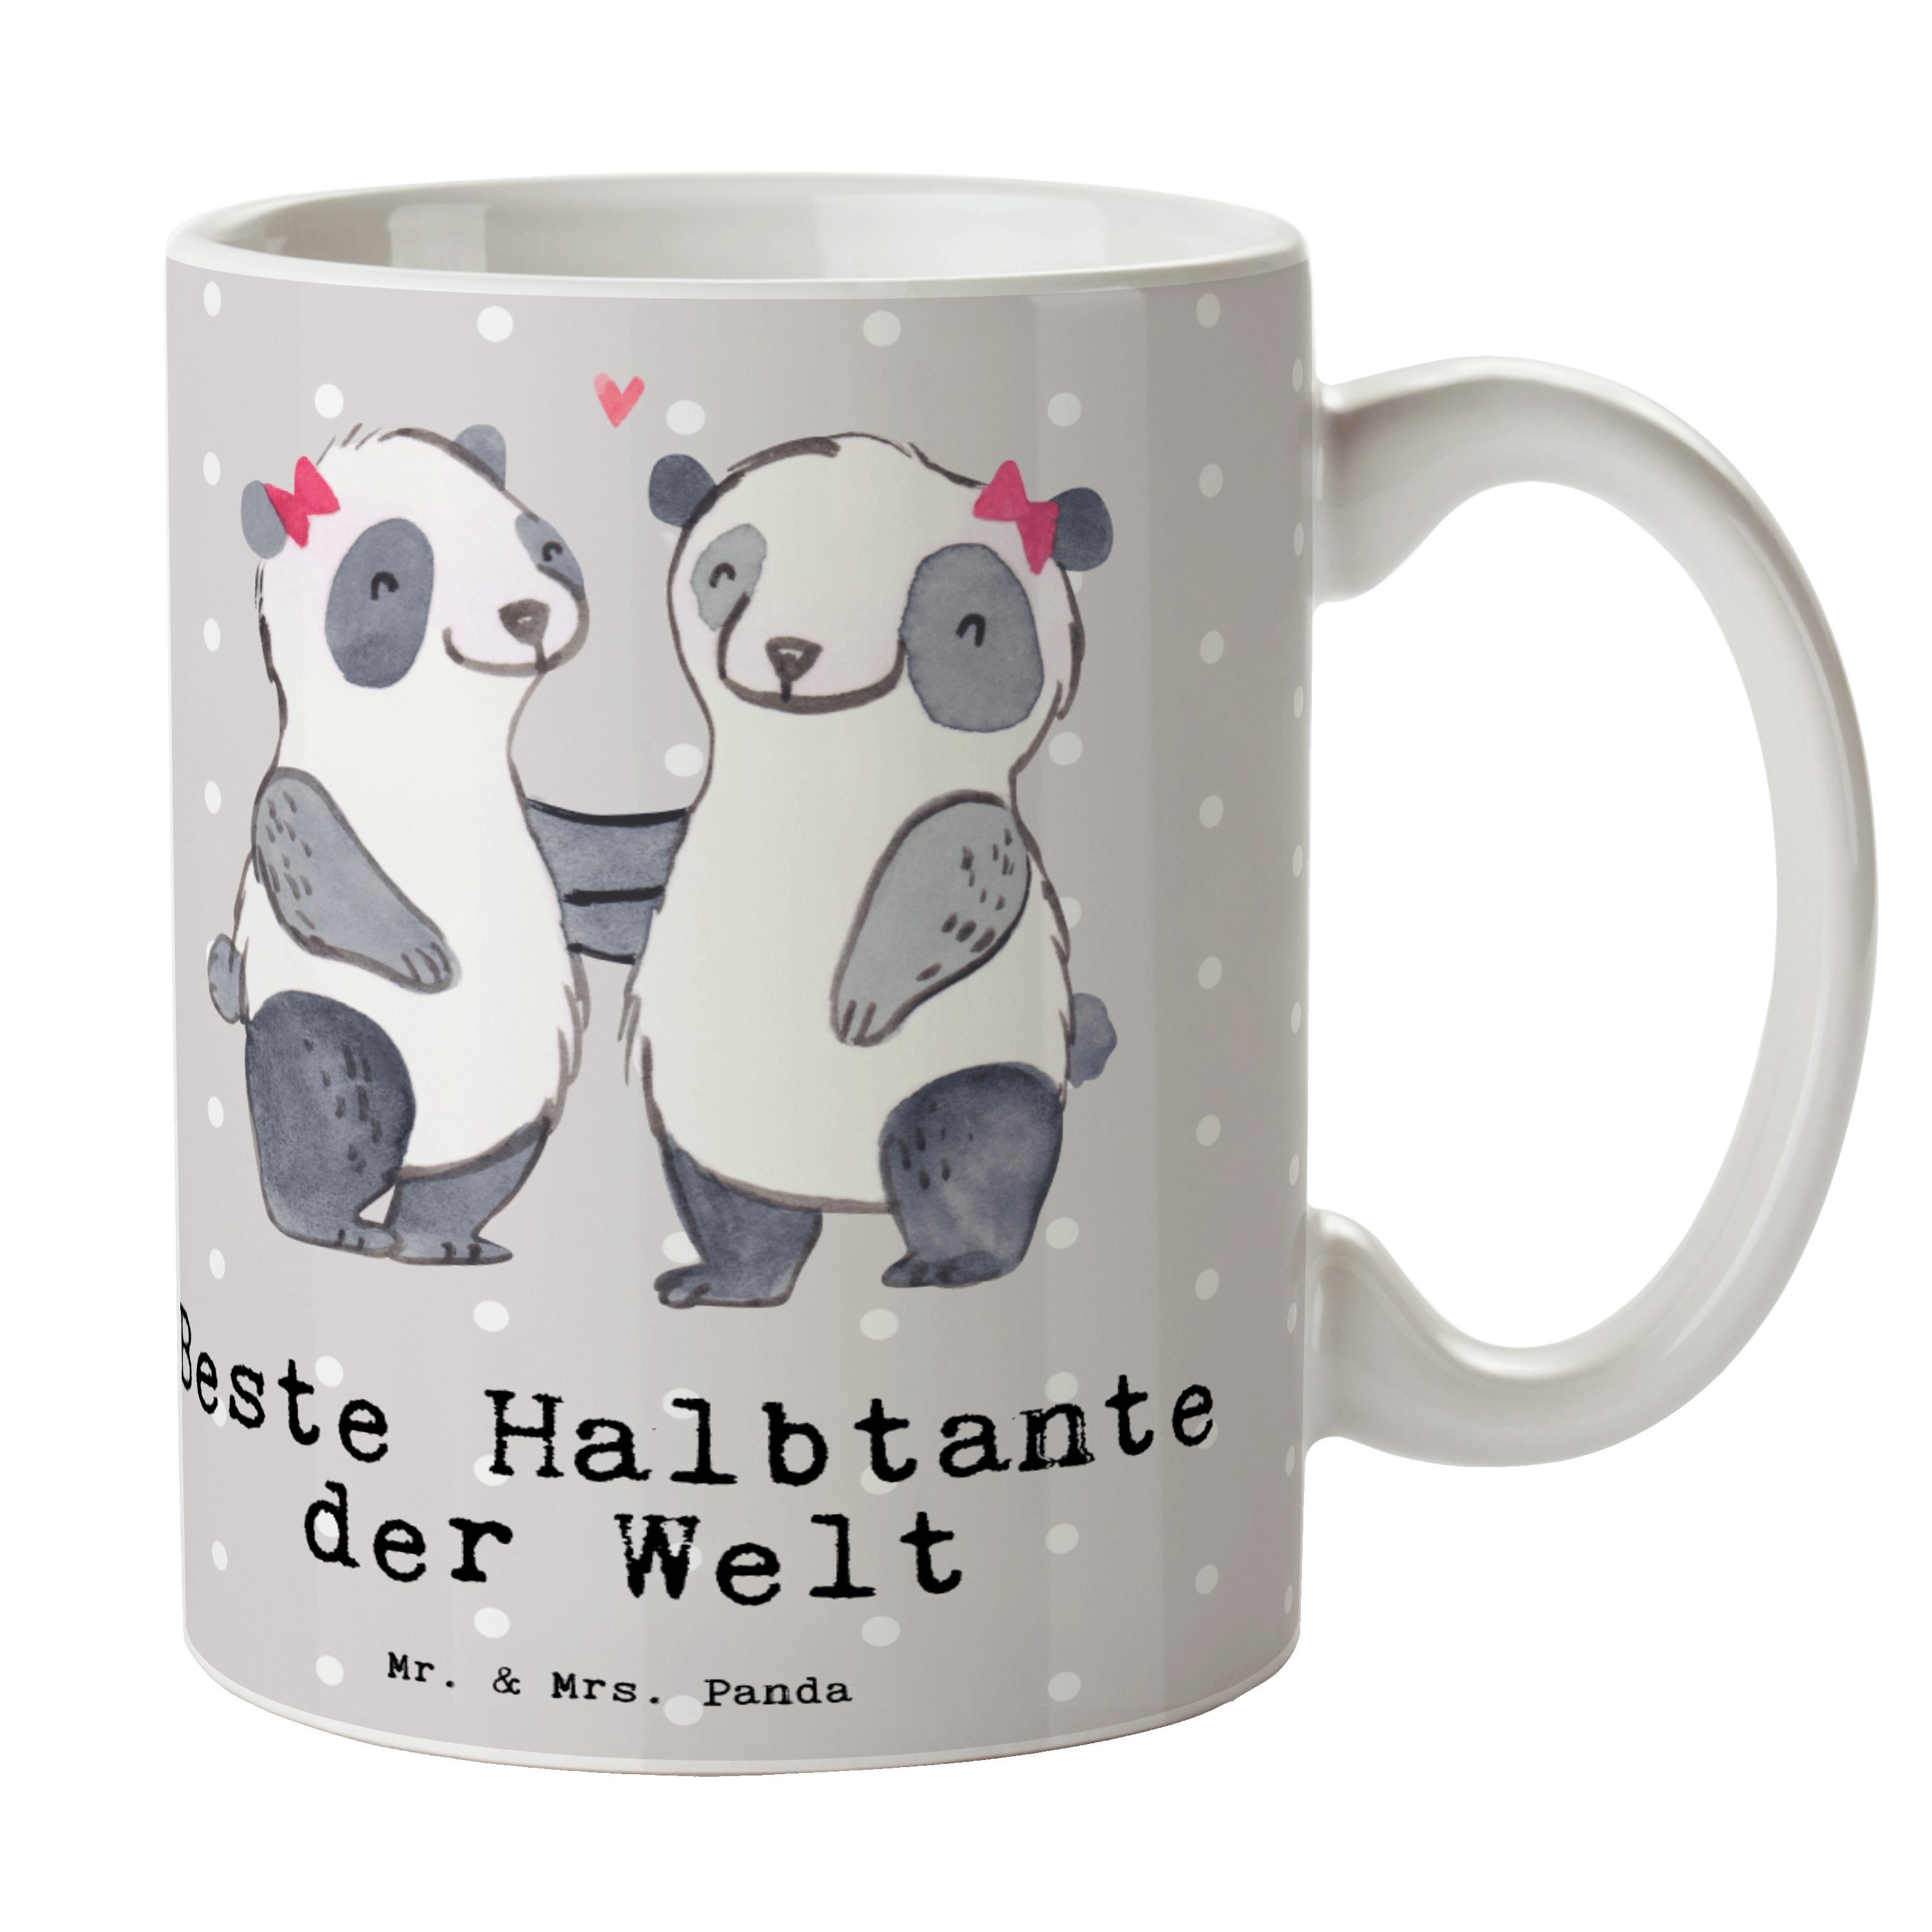 Mr. & Mrs. Panda Tasse Panda Beste Halbtante der Welt - Grau Pastell - Geschenk, Stiefgeschw, Keramik